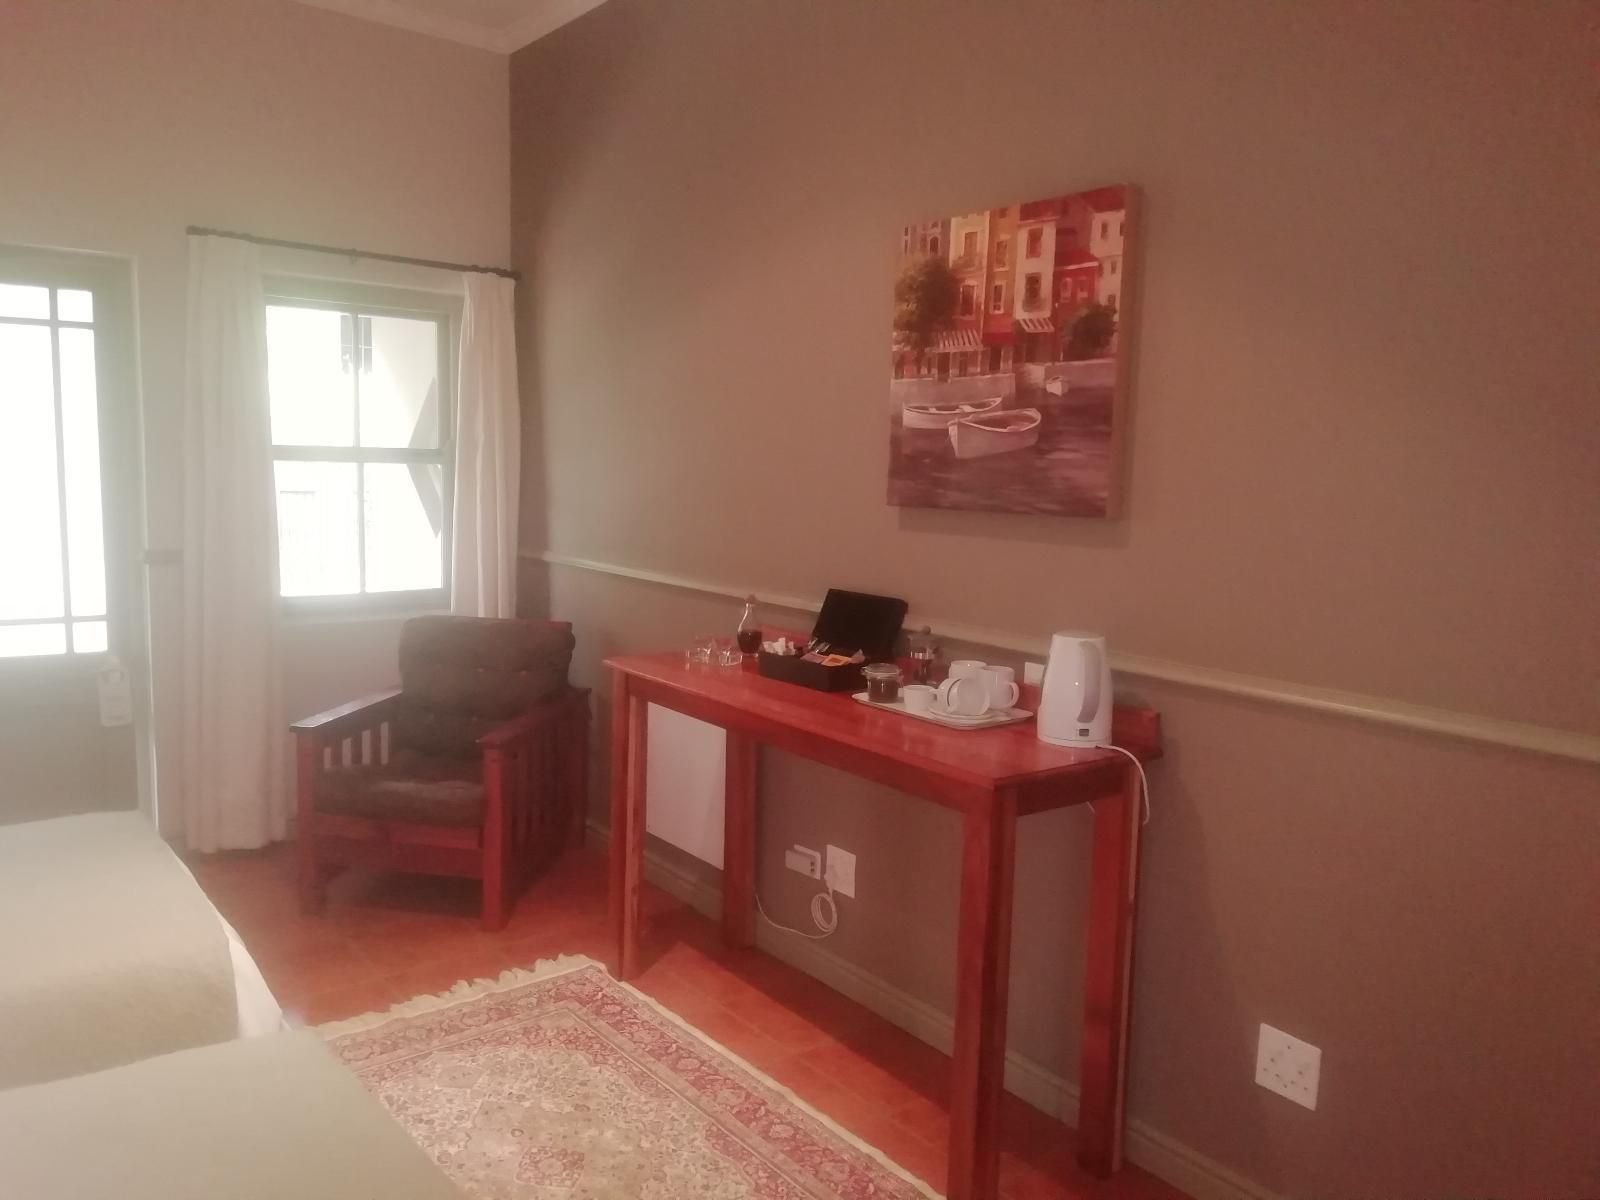 Housemartin Guest Lodge De Rust Western Cape South Africa Sepia Tones, Living Room